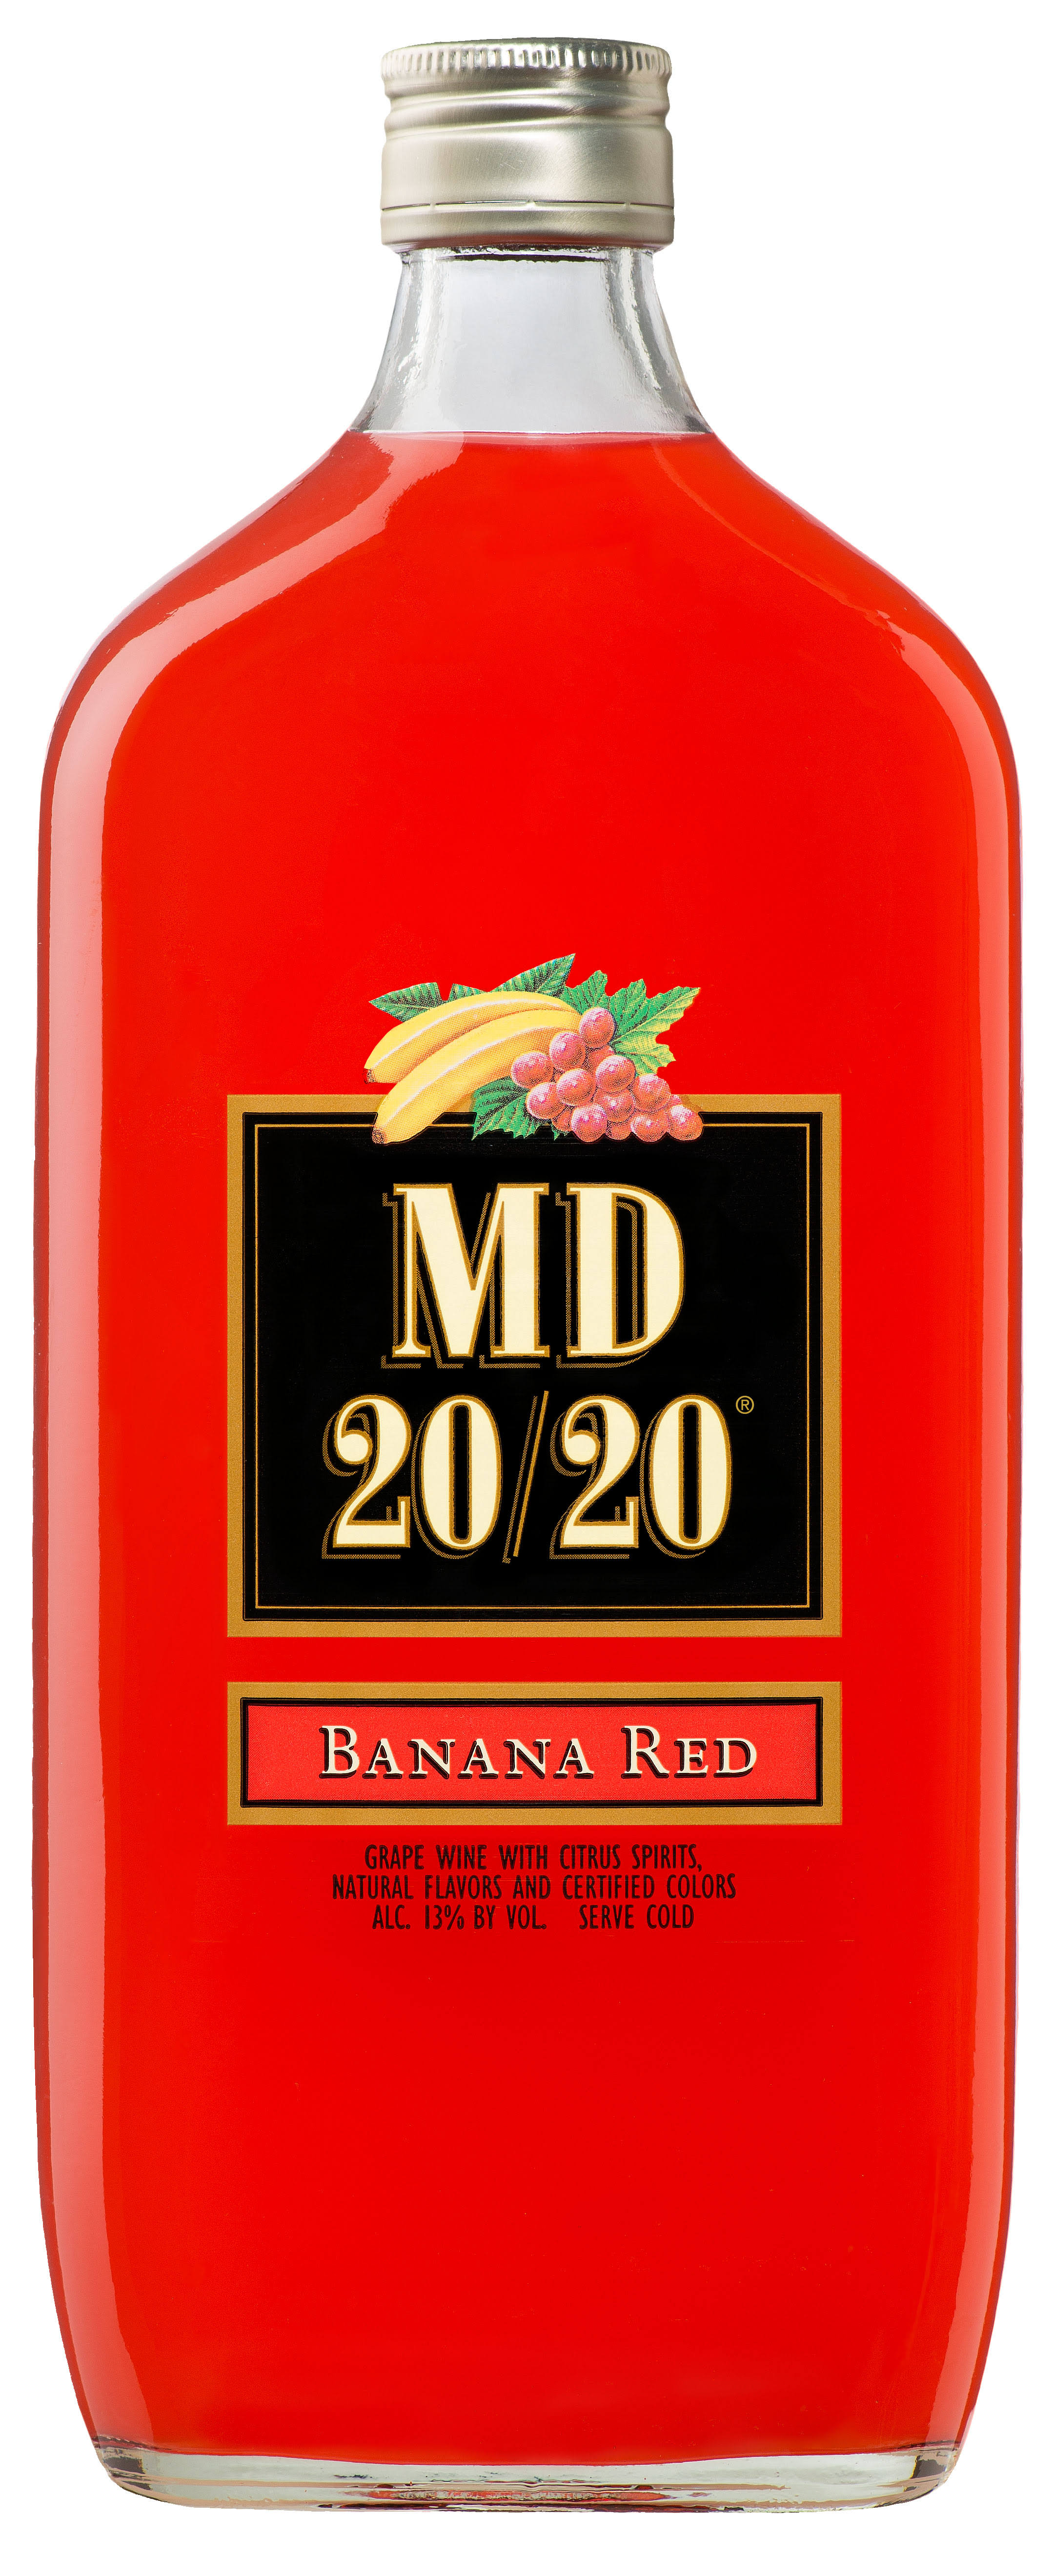 MD 20/20 Banana Red - 750ml